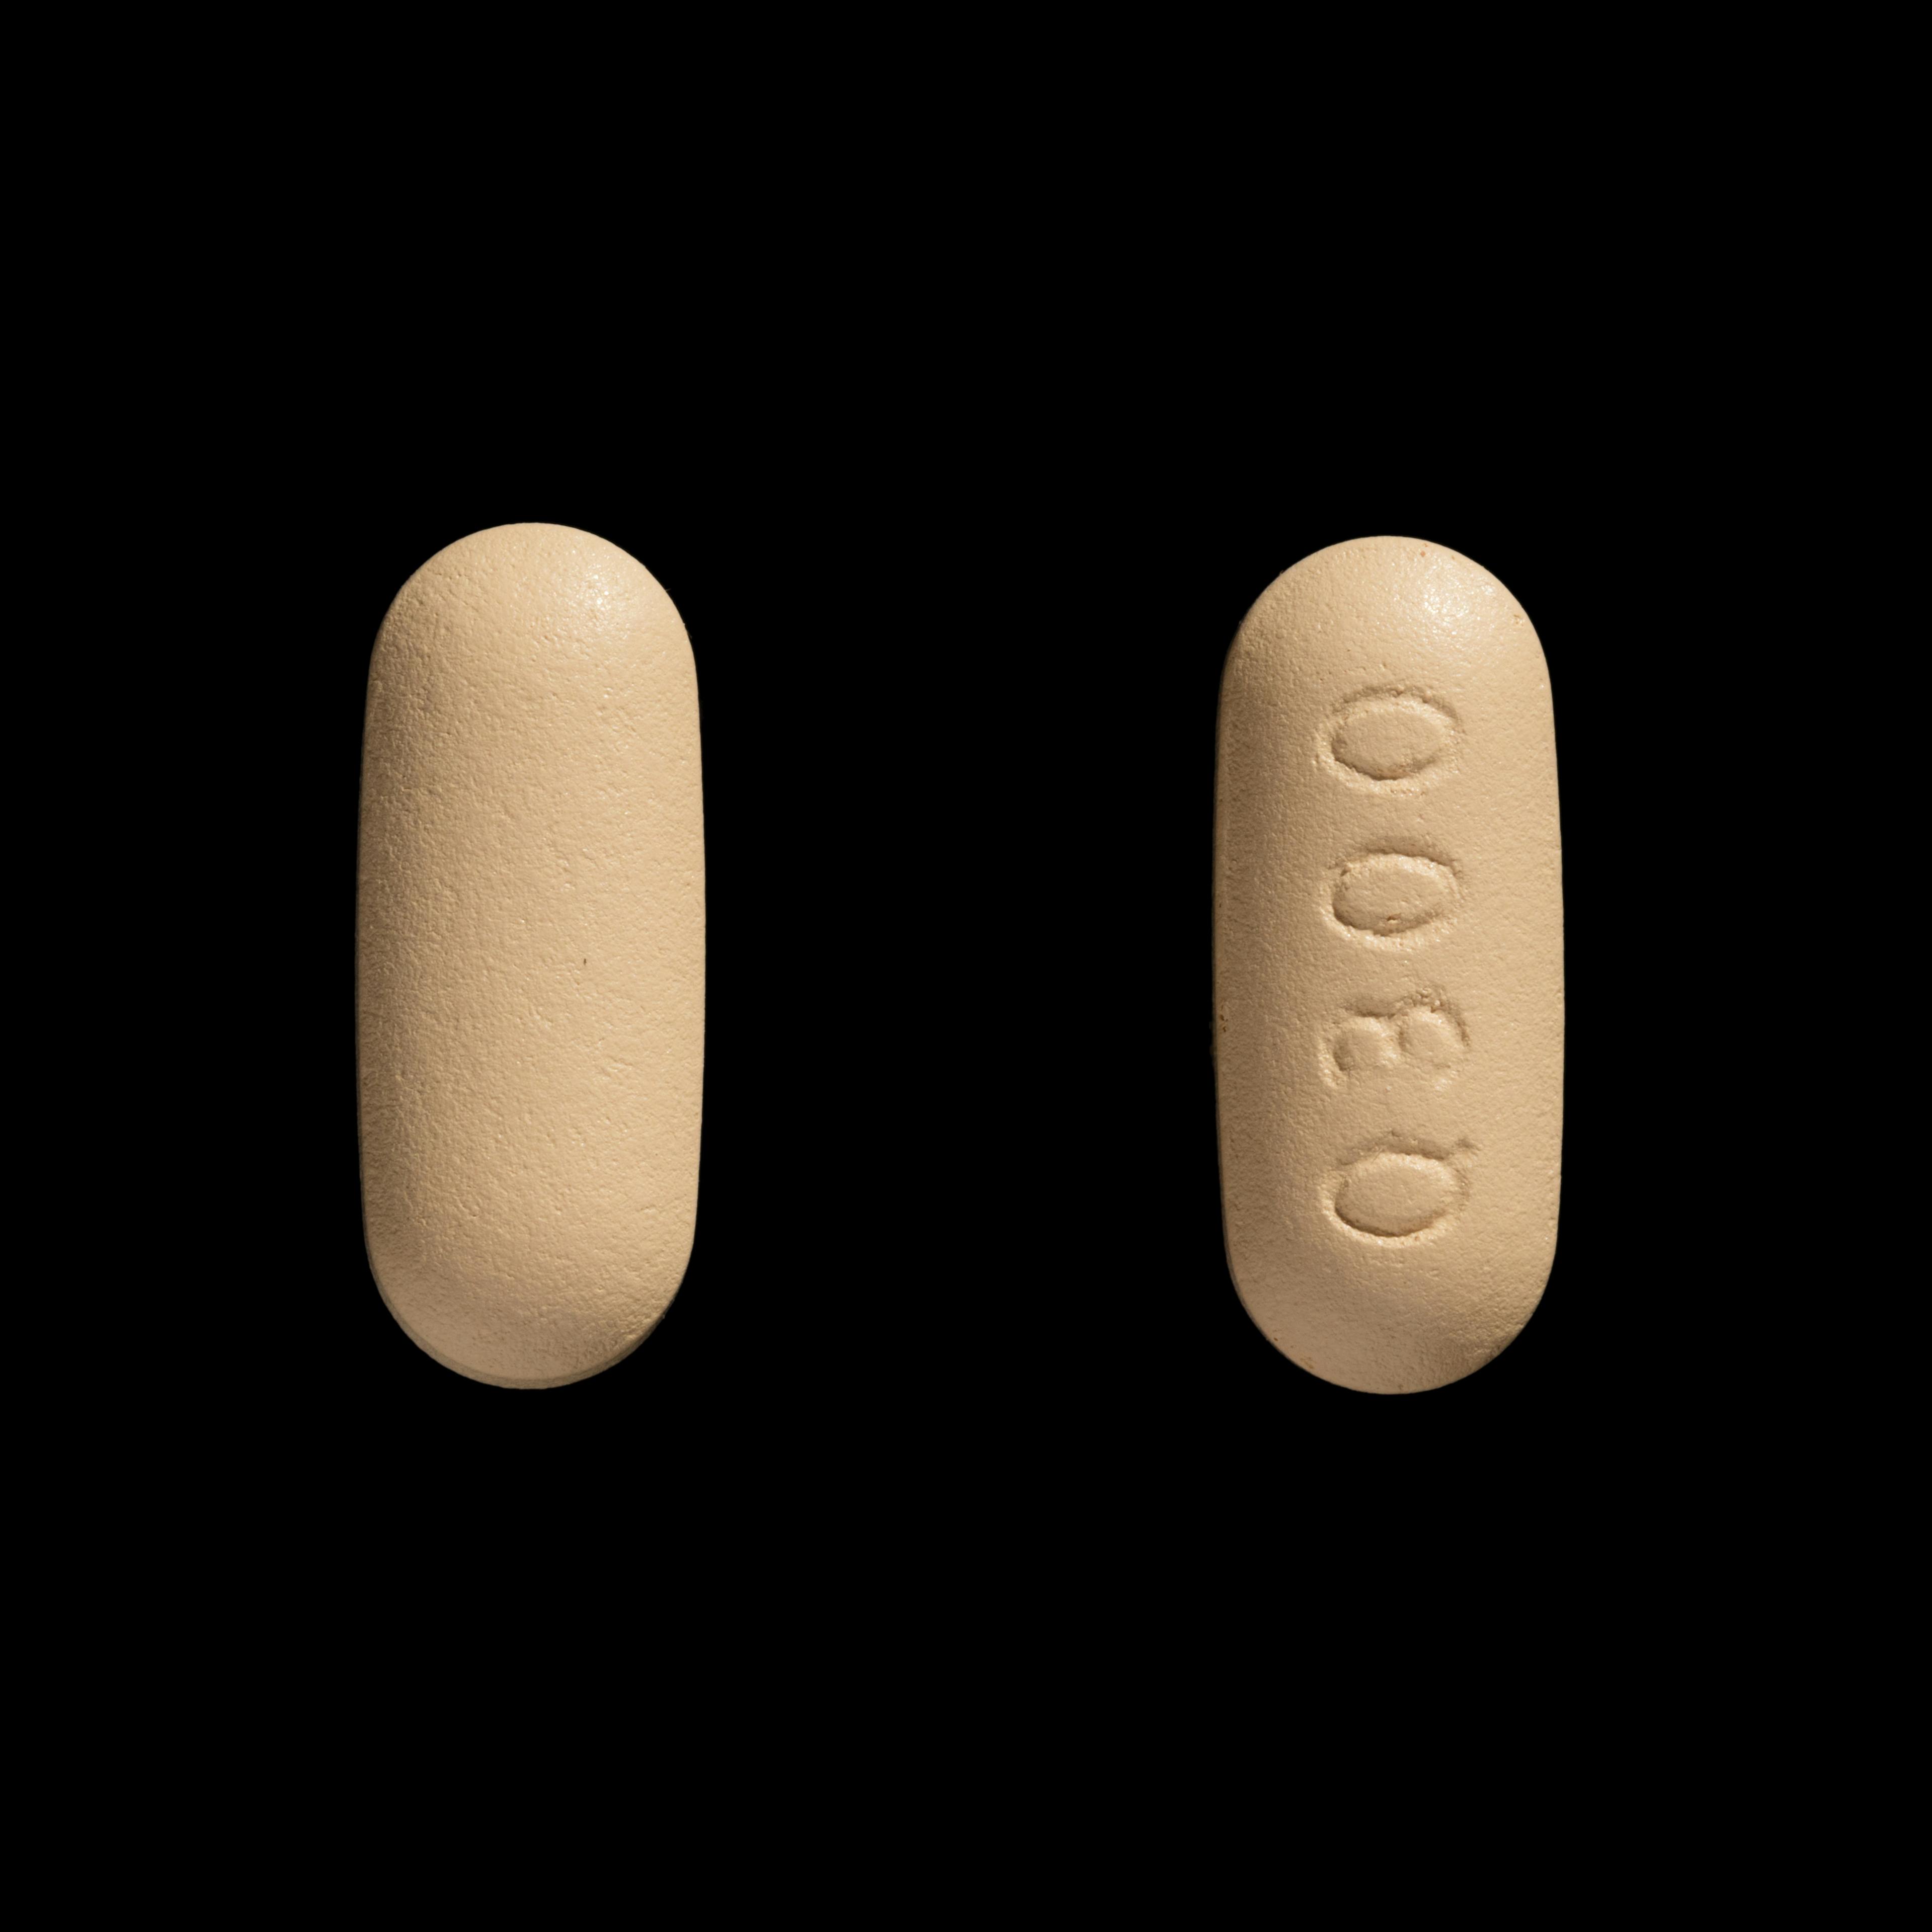 Quetiapin ratiopharm 300 mg töflur